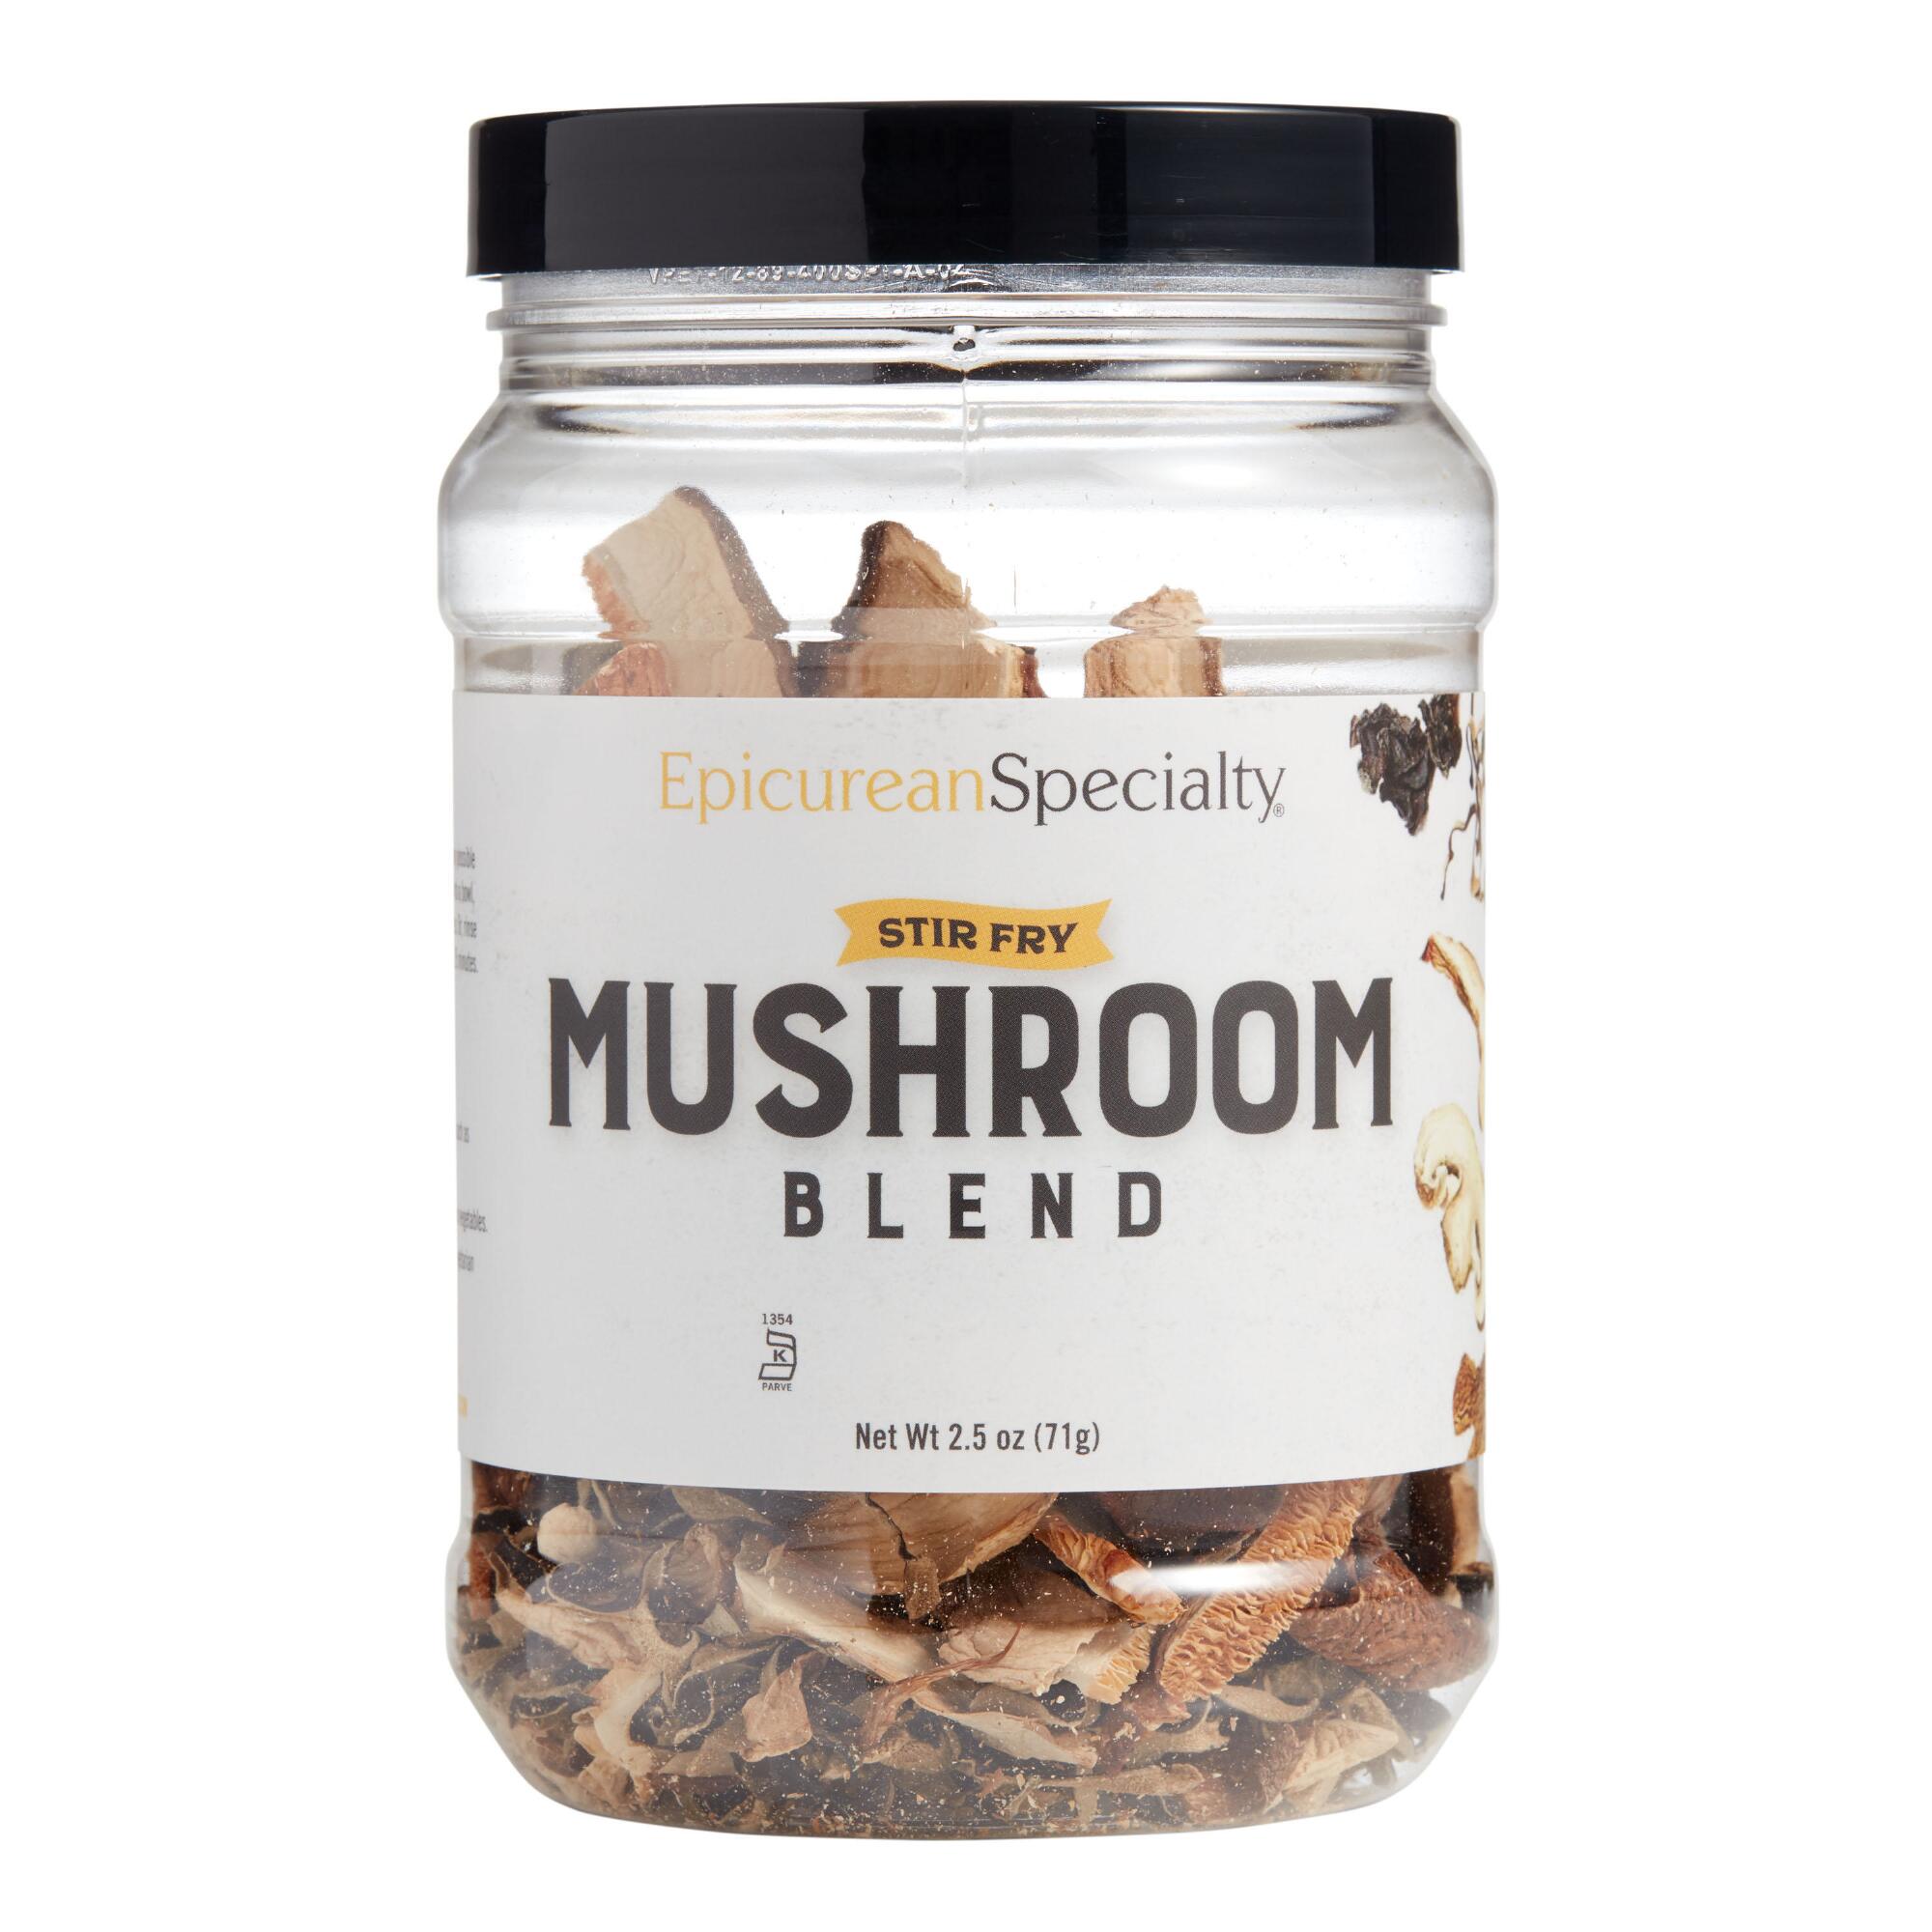 Epicurean Specialty Stir Fry Dried Mushroom Blend by World Market